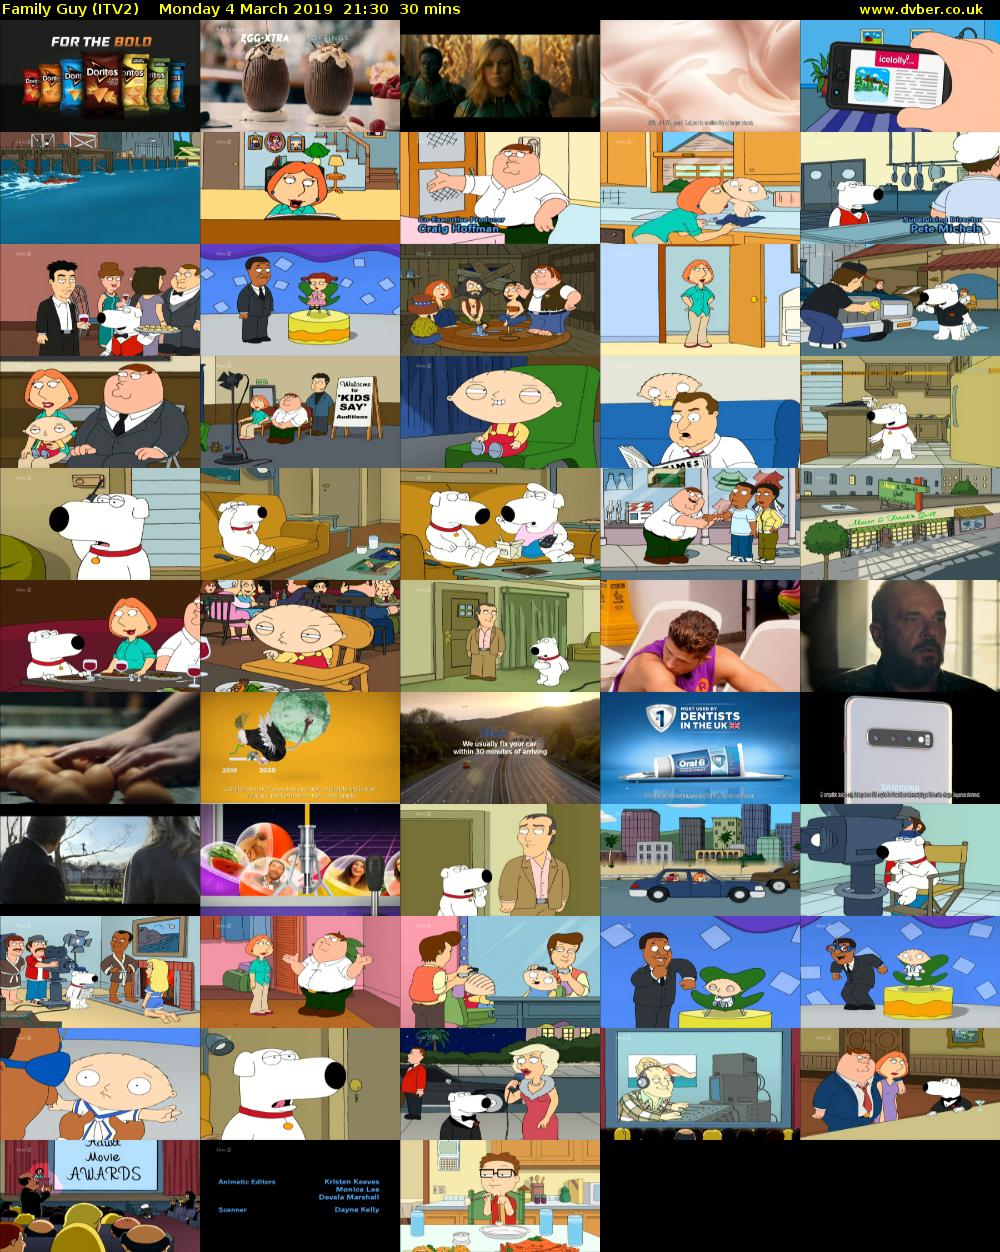 Family Guy (ITV2) Monday 4 March 2019 21:30 - 22:00